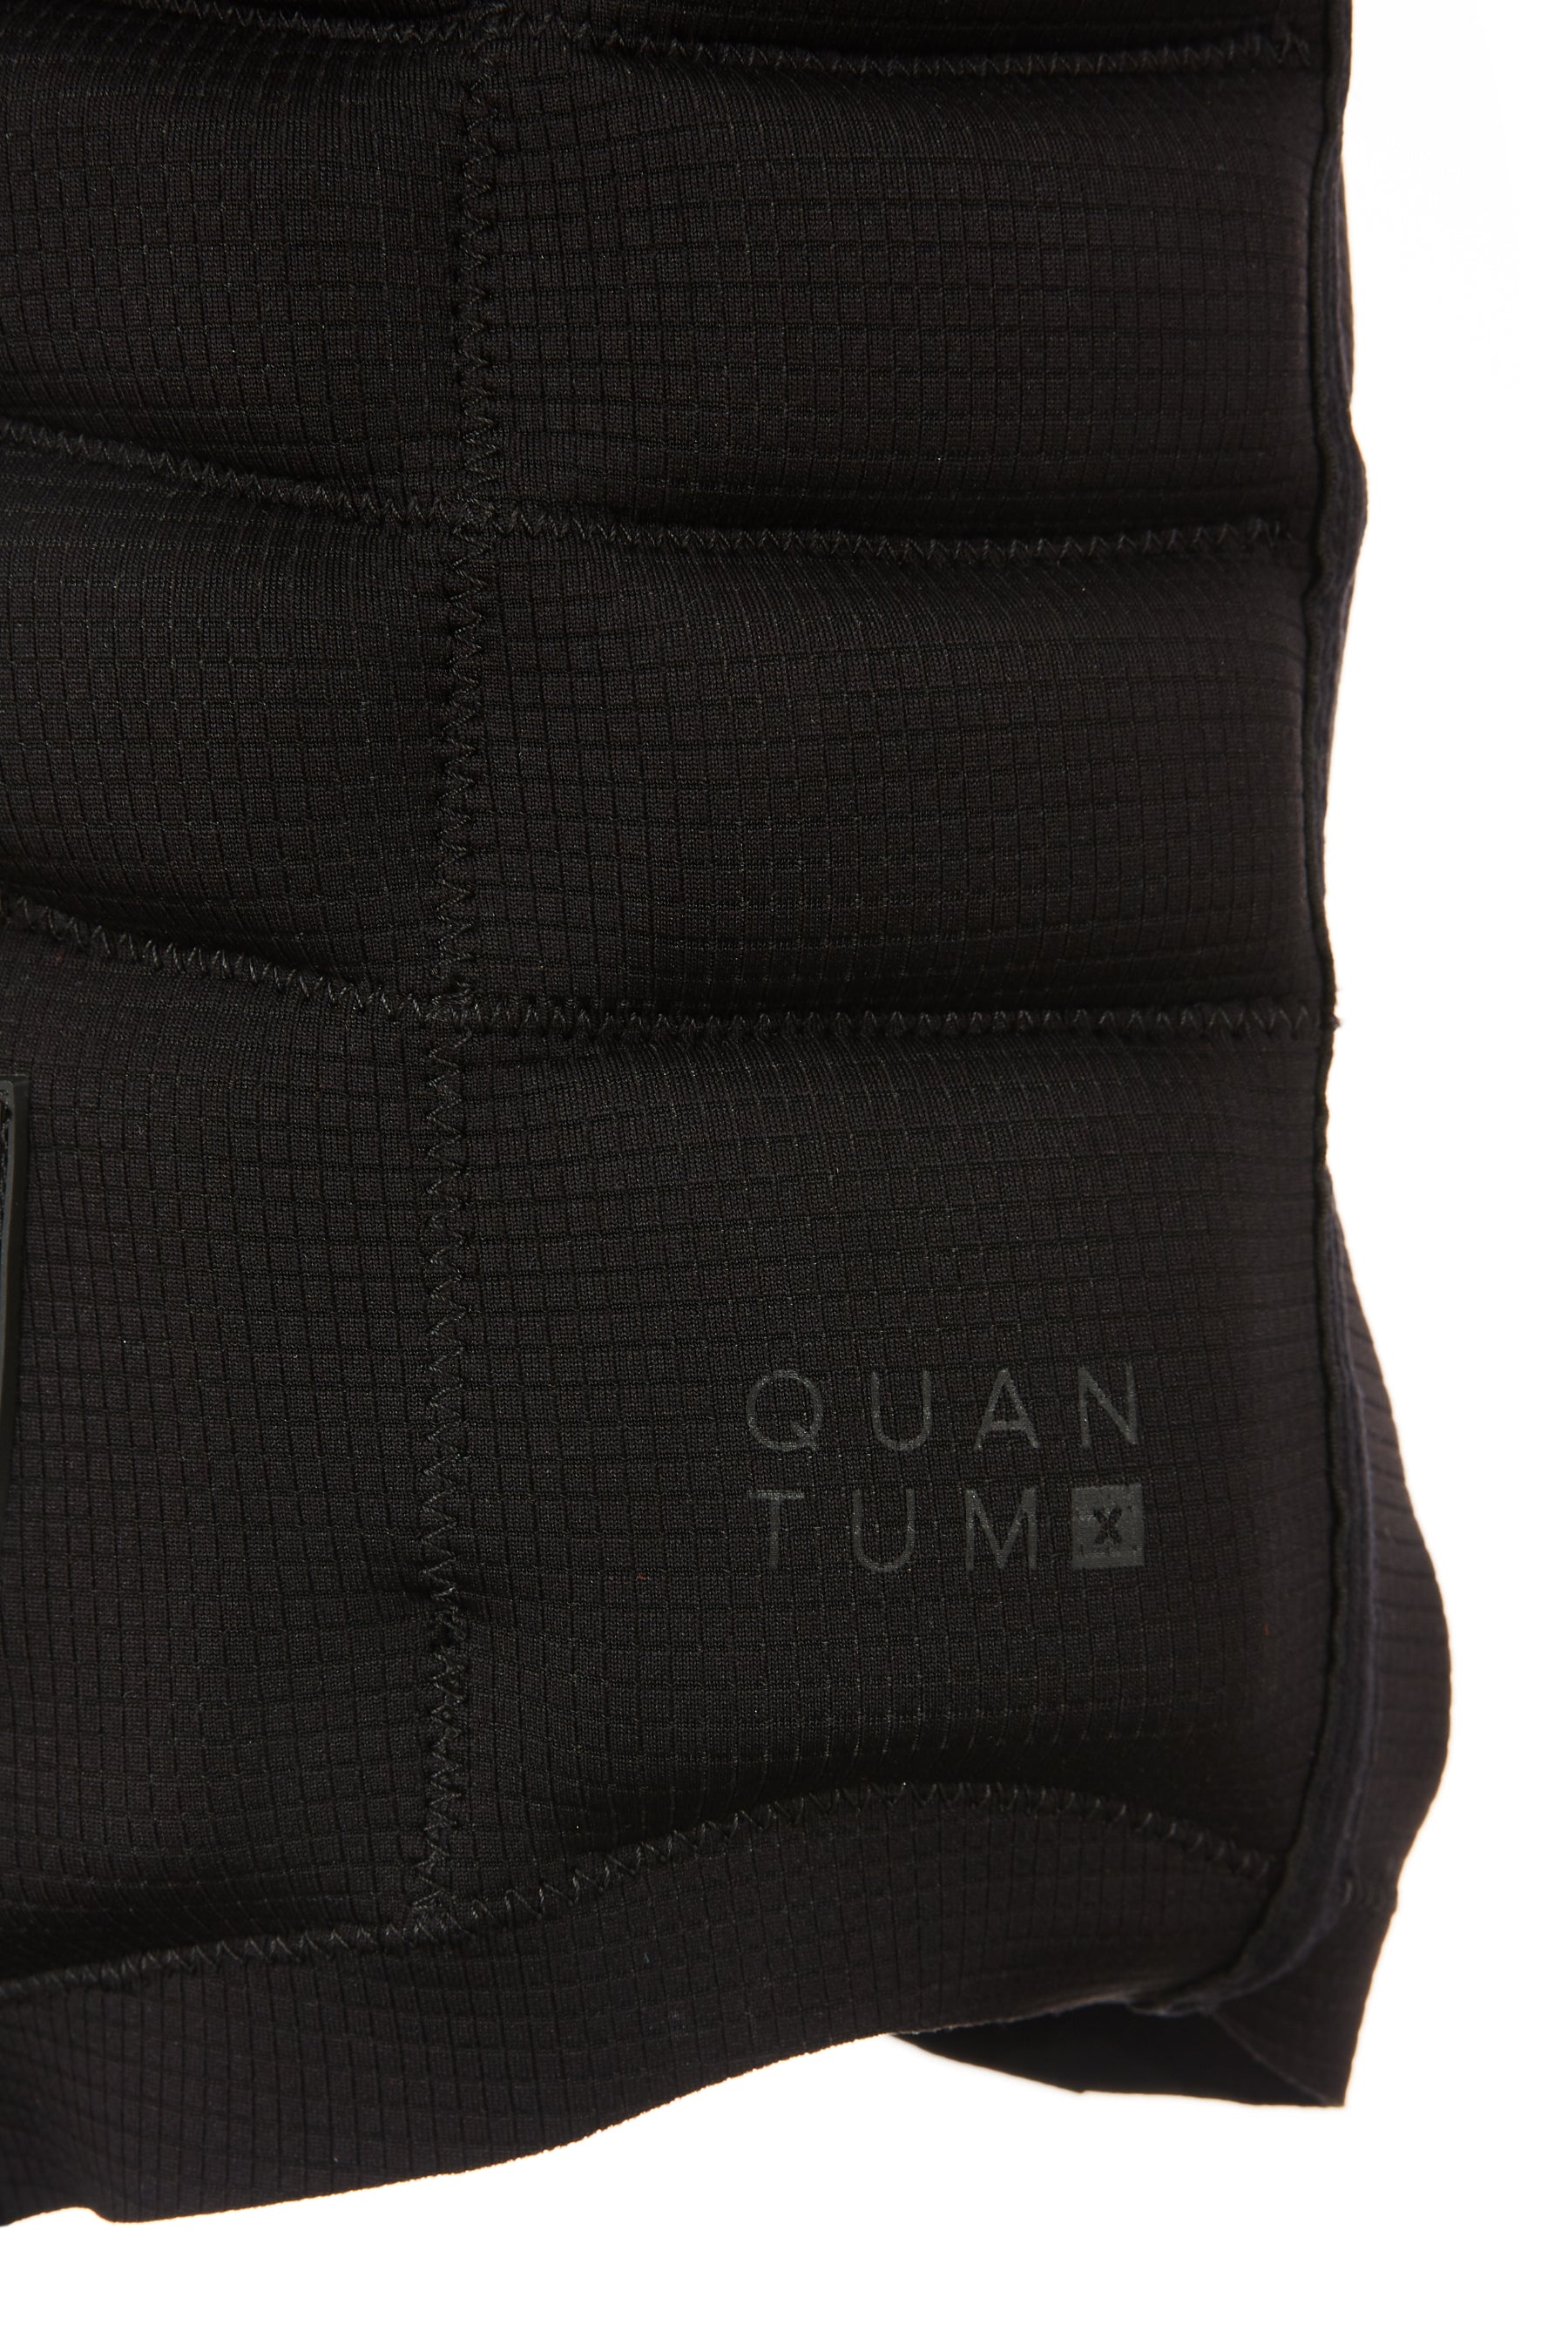 Quantum X F/E Mens Neo Life Jacket - Black - Sample